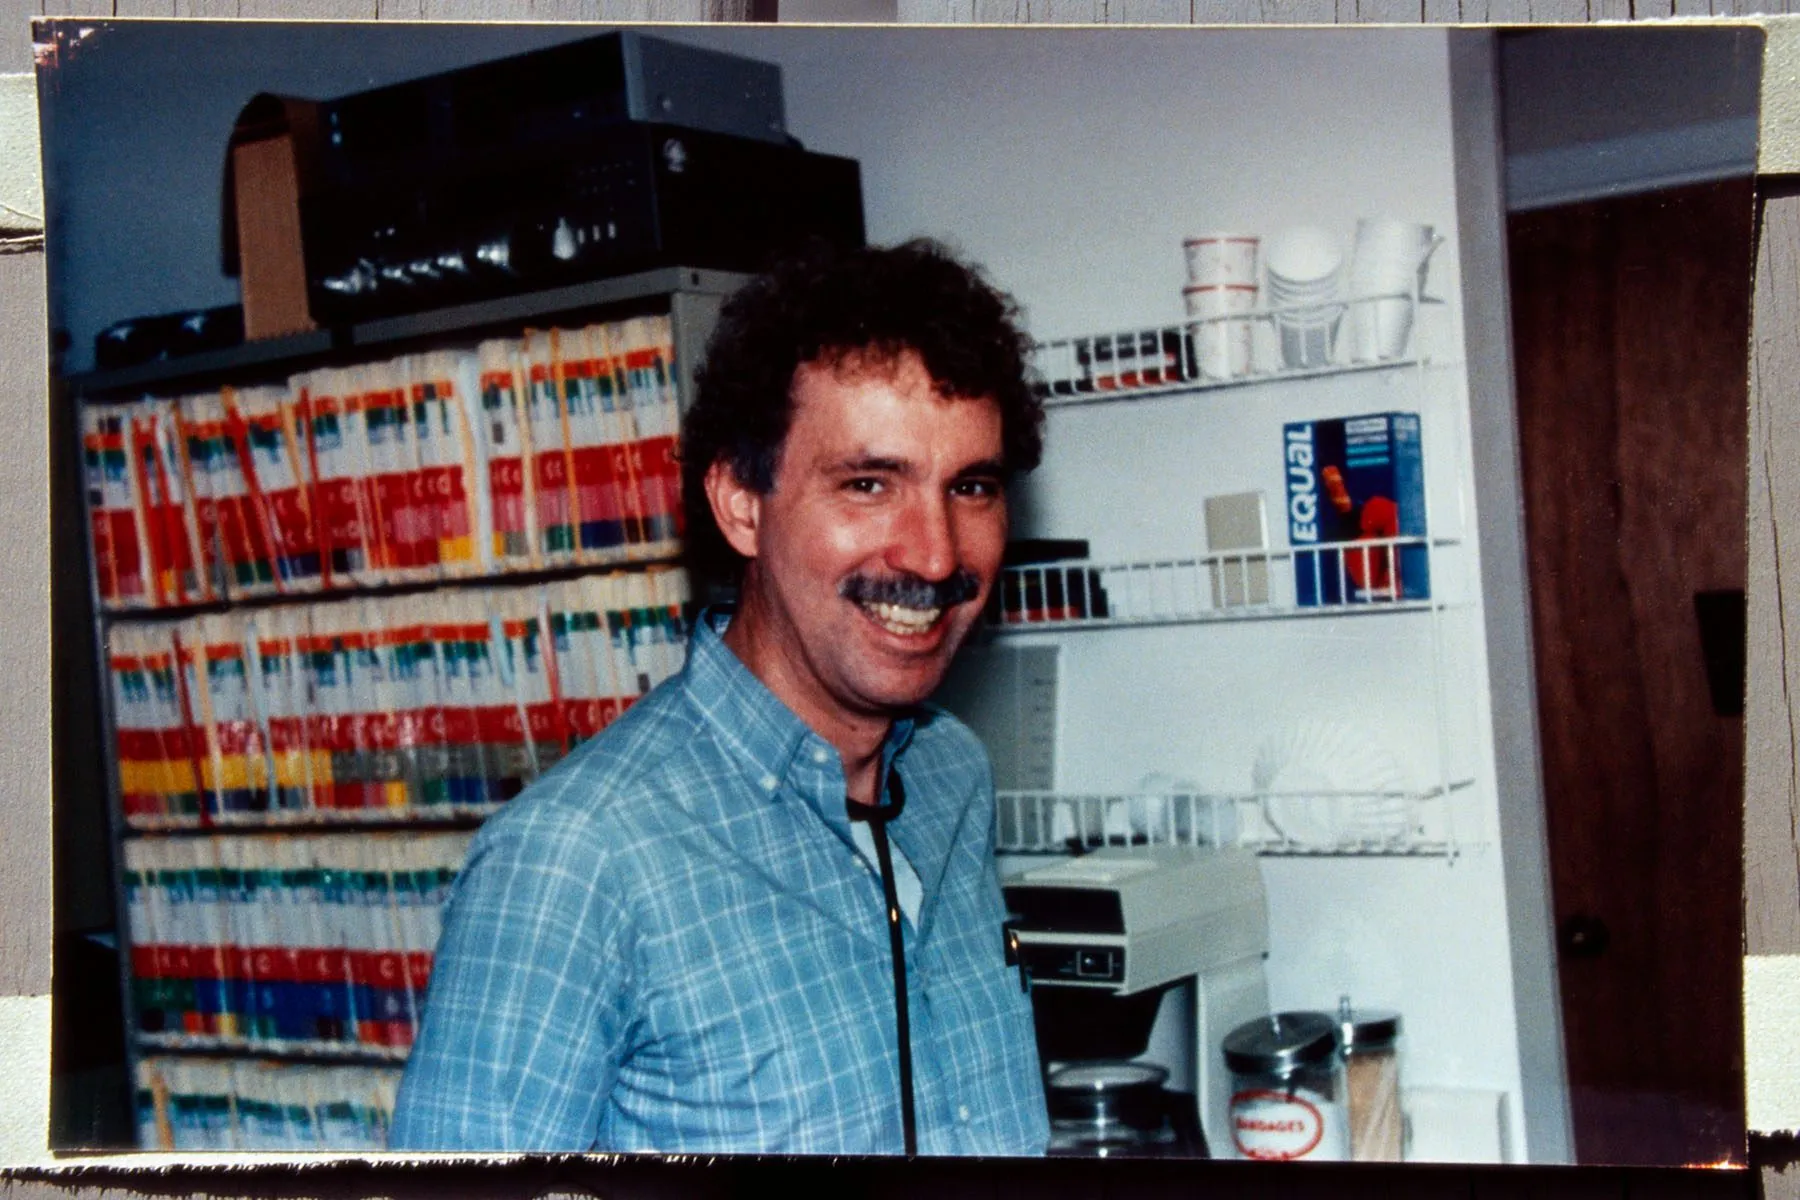 Dr. David Gunn working at a medical clinic